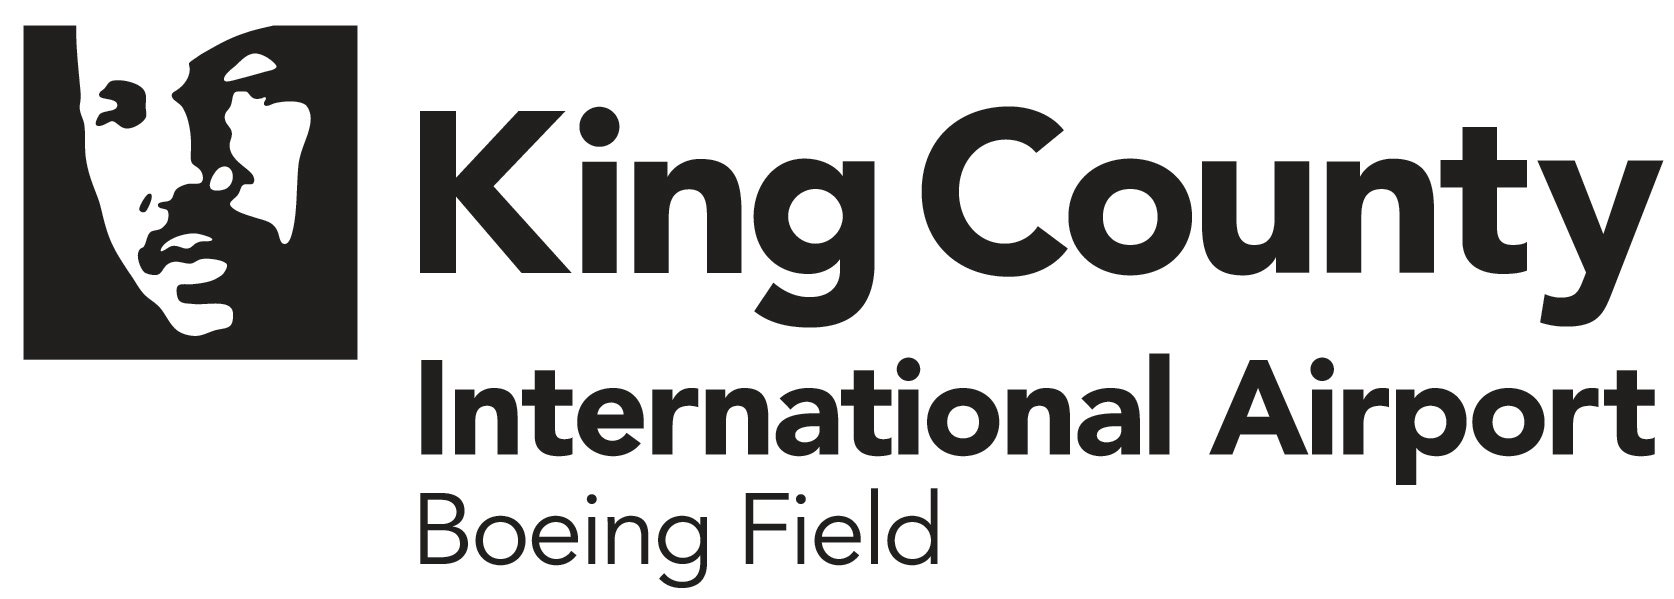 King County International Airport Boeing Field